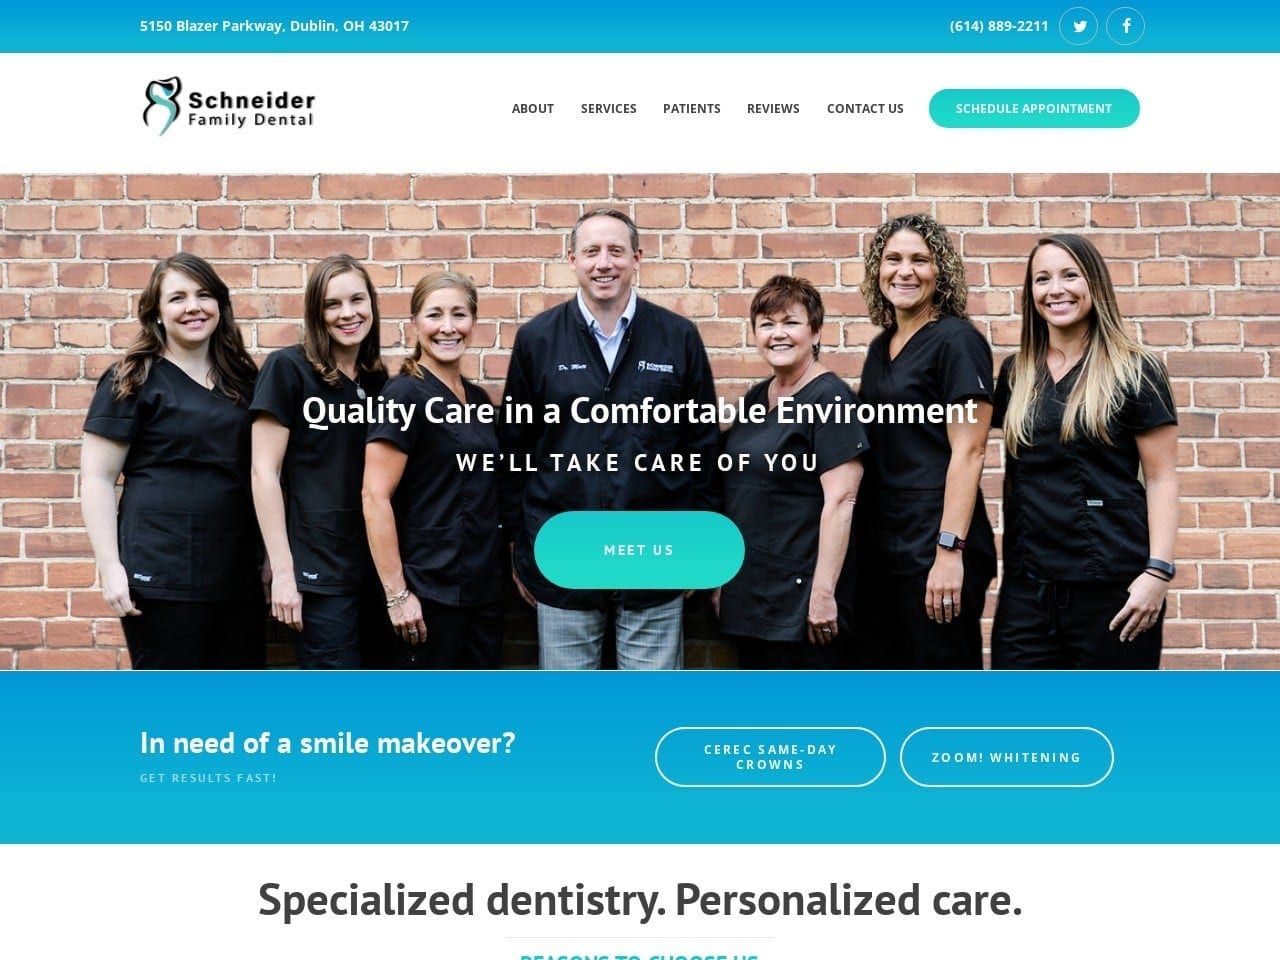 Schneider Family Dental Website Screenshot from schneiderfamilydental.com